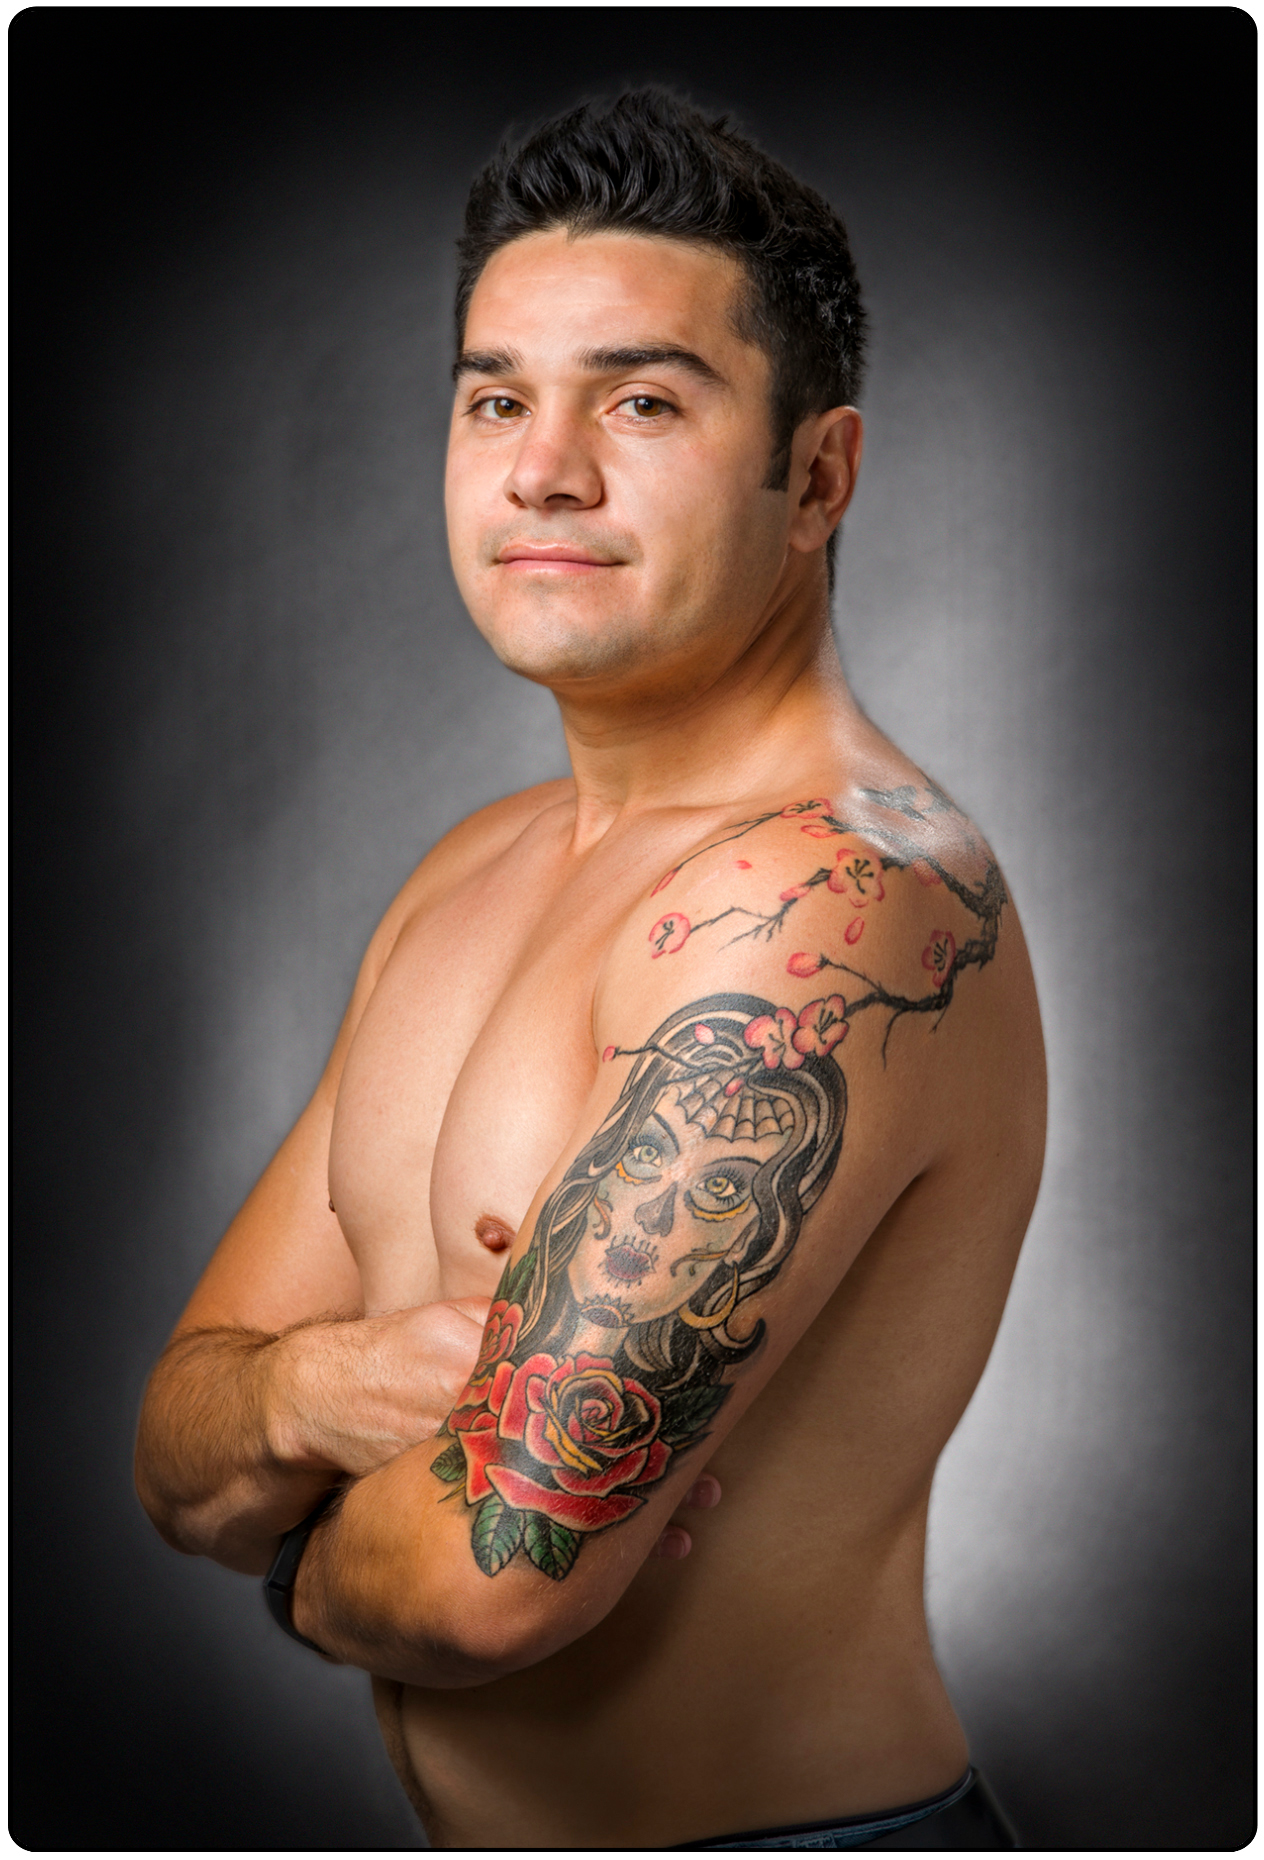 Studio portrait of tattoos on a Hispanic man